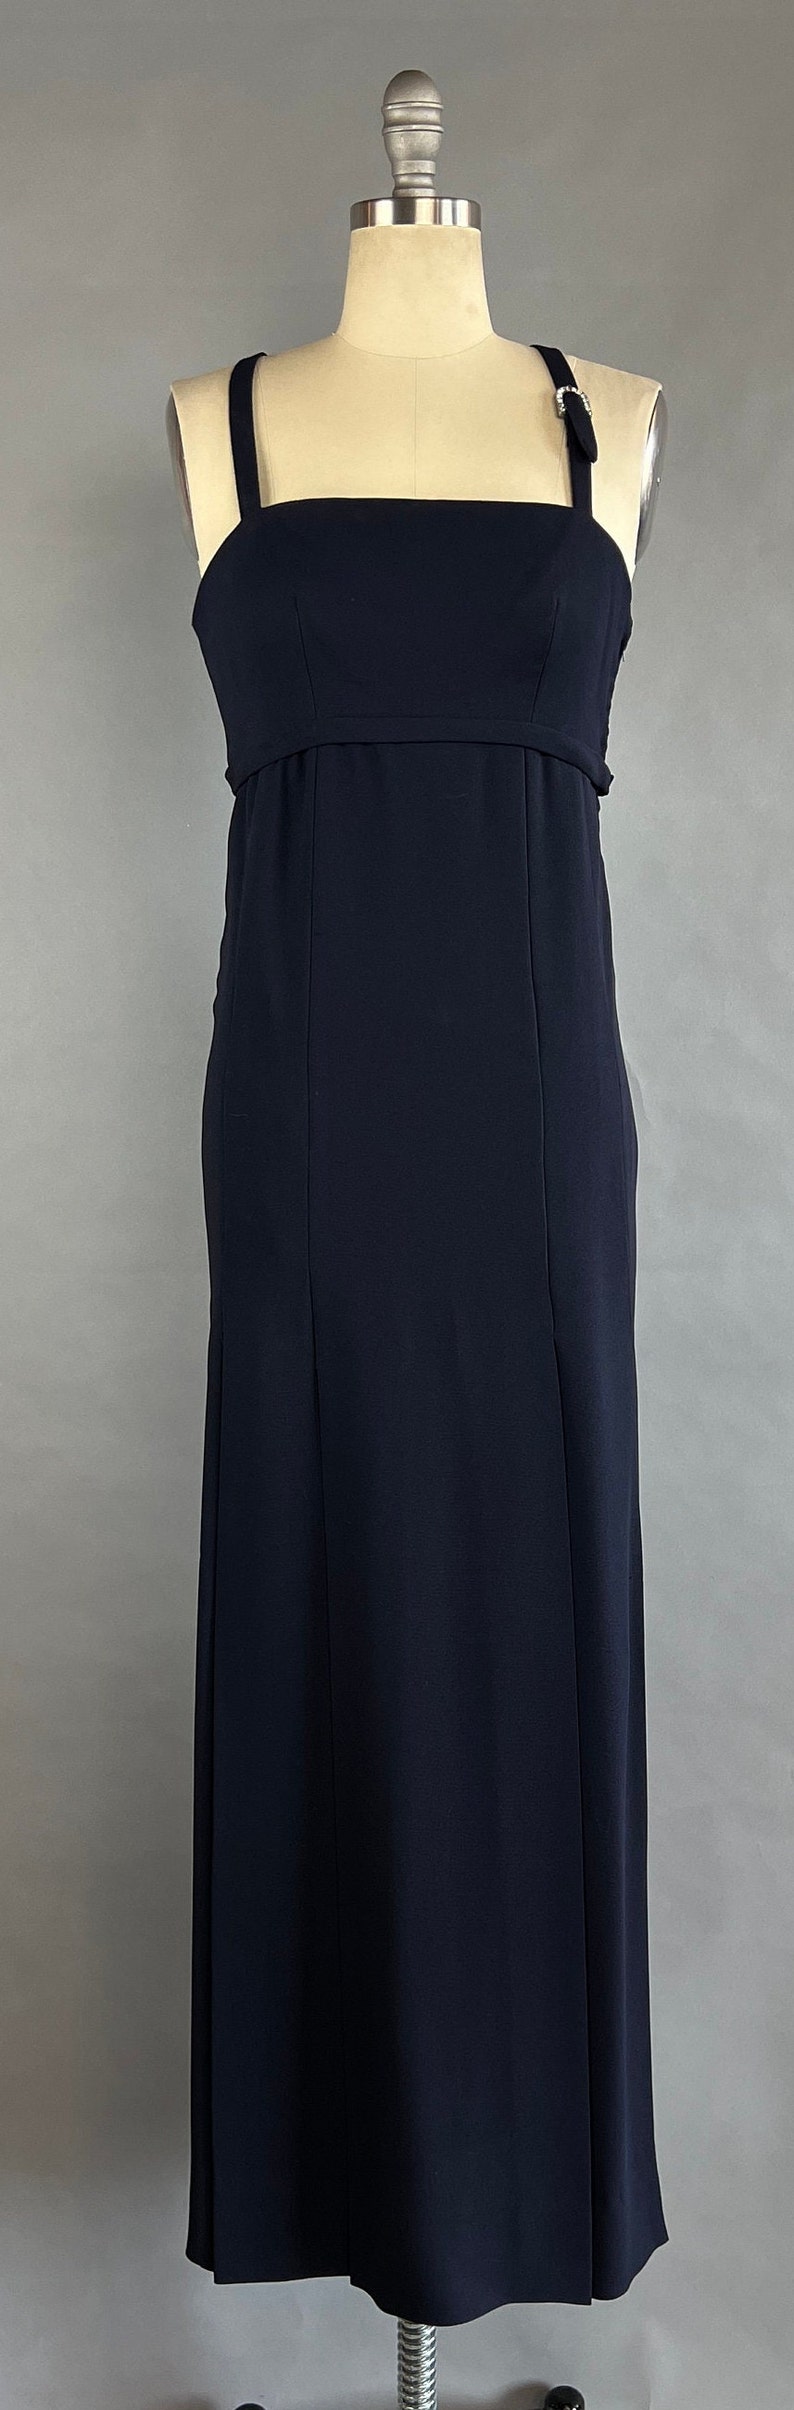 1960s Column Dress / Nina Ricci Navy Blue Silk Crepe Dress with Rhinestone Buckele / Size Small image 8